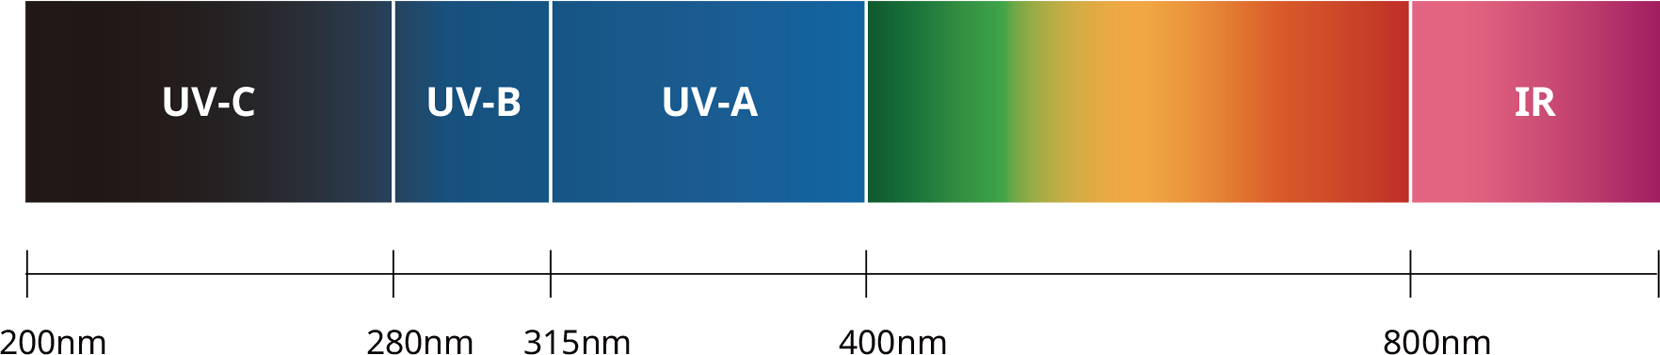 UV LED Sterile Field